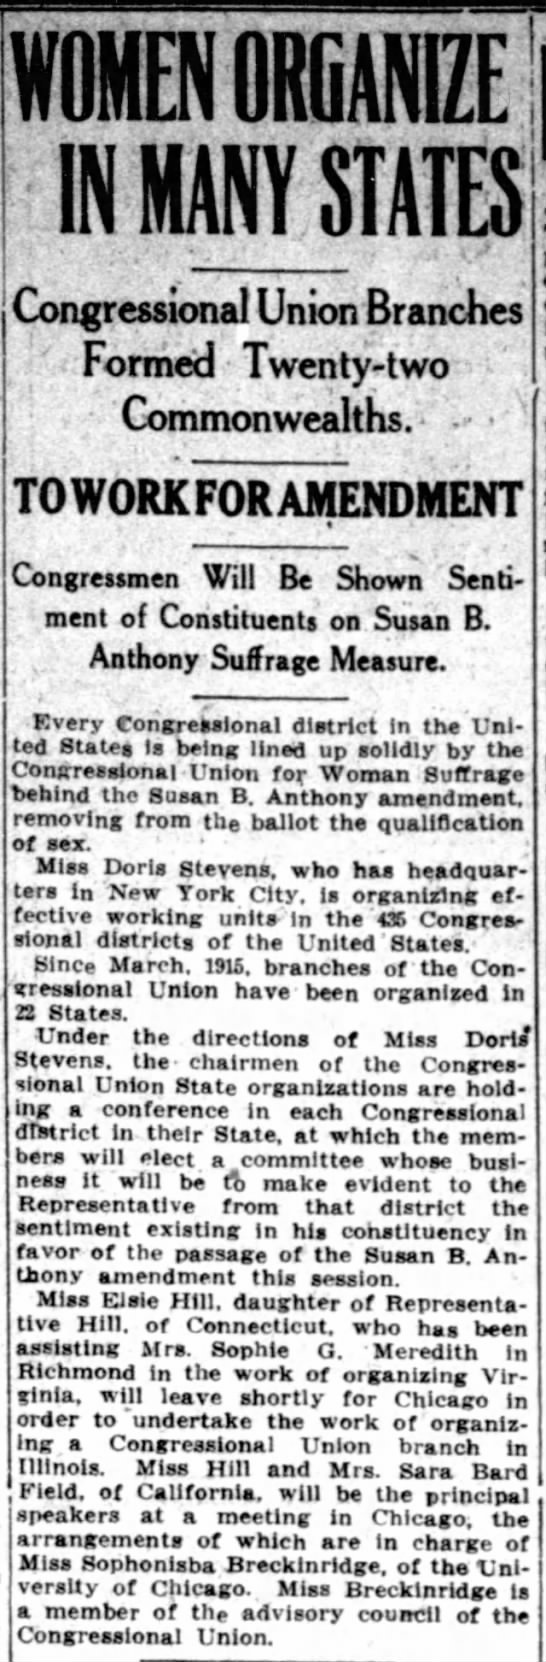 Women Organize in Many States, The Washington Herald, (Washington, D.C.) 24 January 1916, p 10 - 